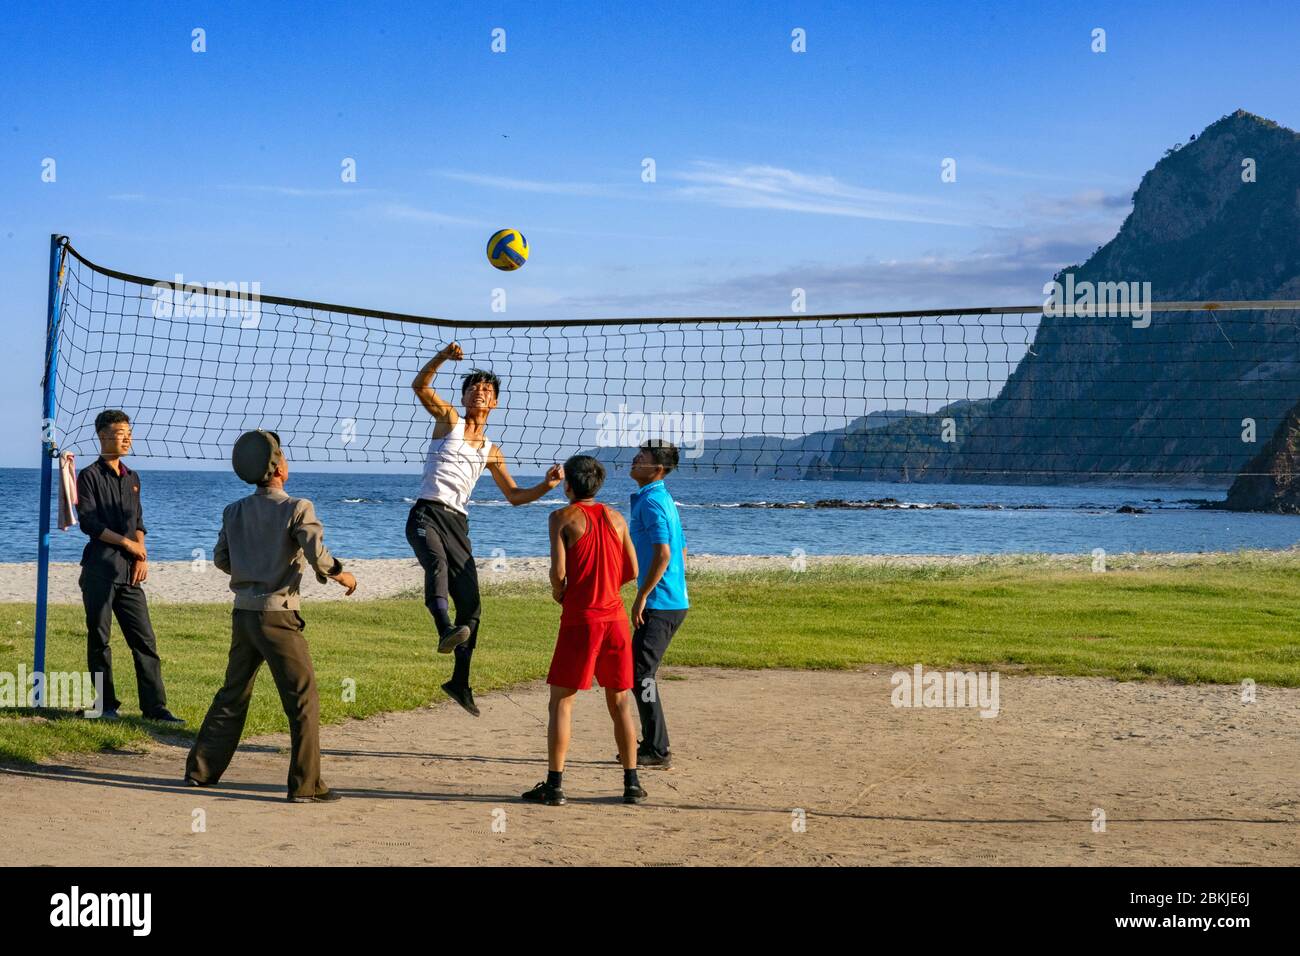 North Korea, Coastal Chilbo, playing volleyball Stock Photo